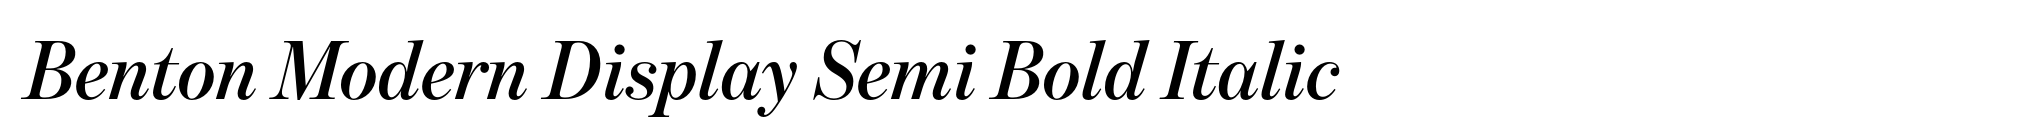 Benton Modern Display Semi Bold Italic image